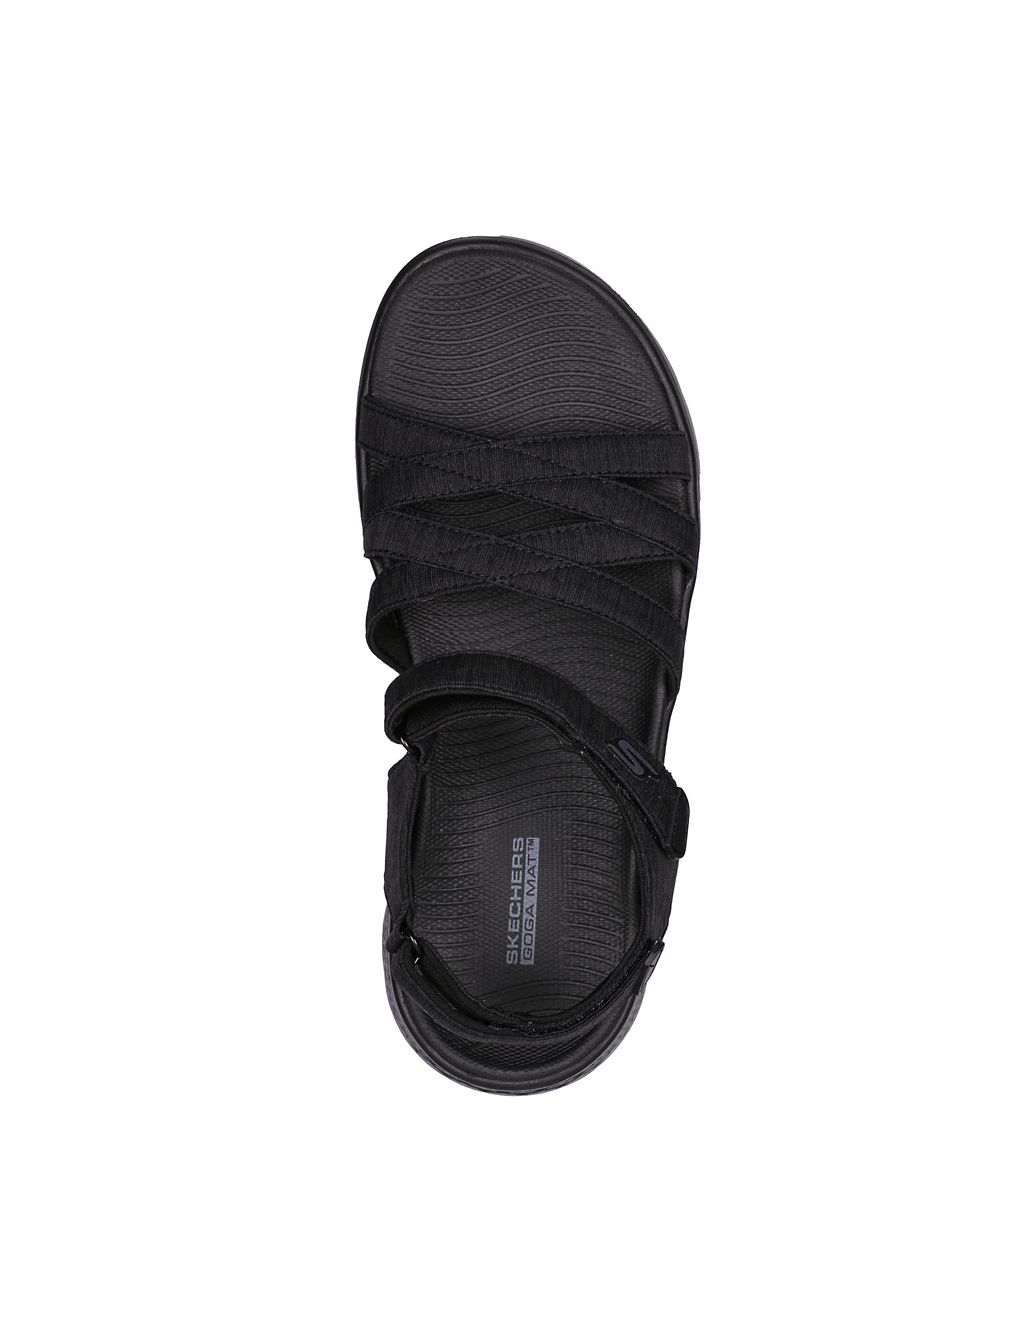 GOwalk Flex Sunshine Sandals 2 of 5